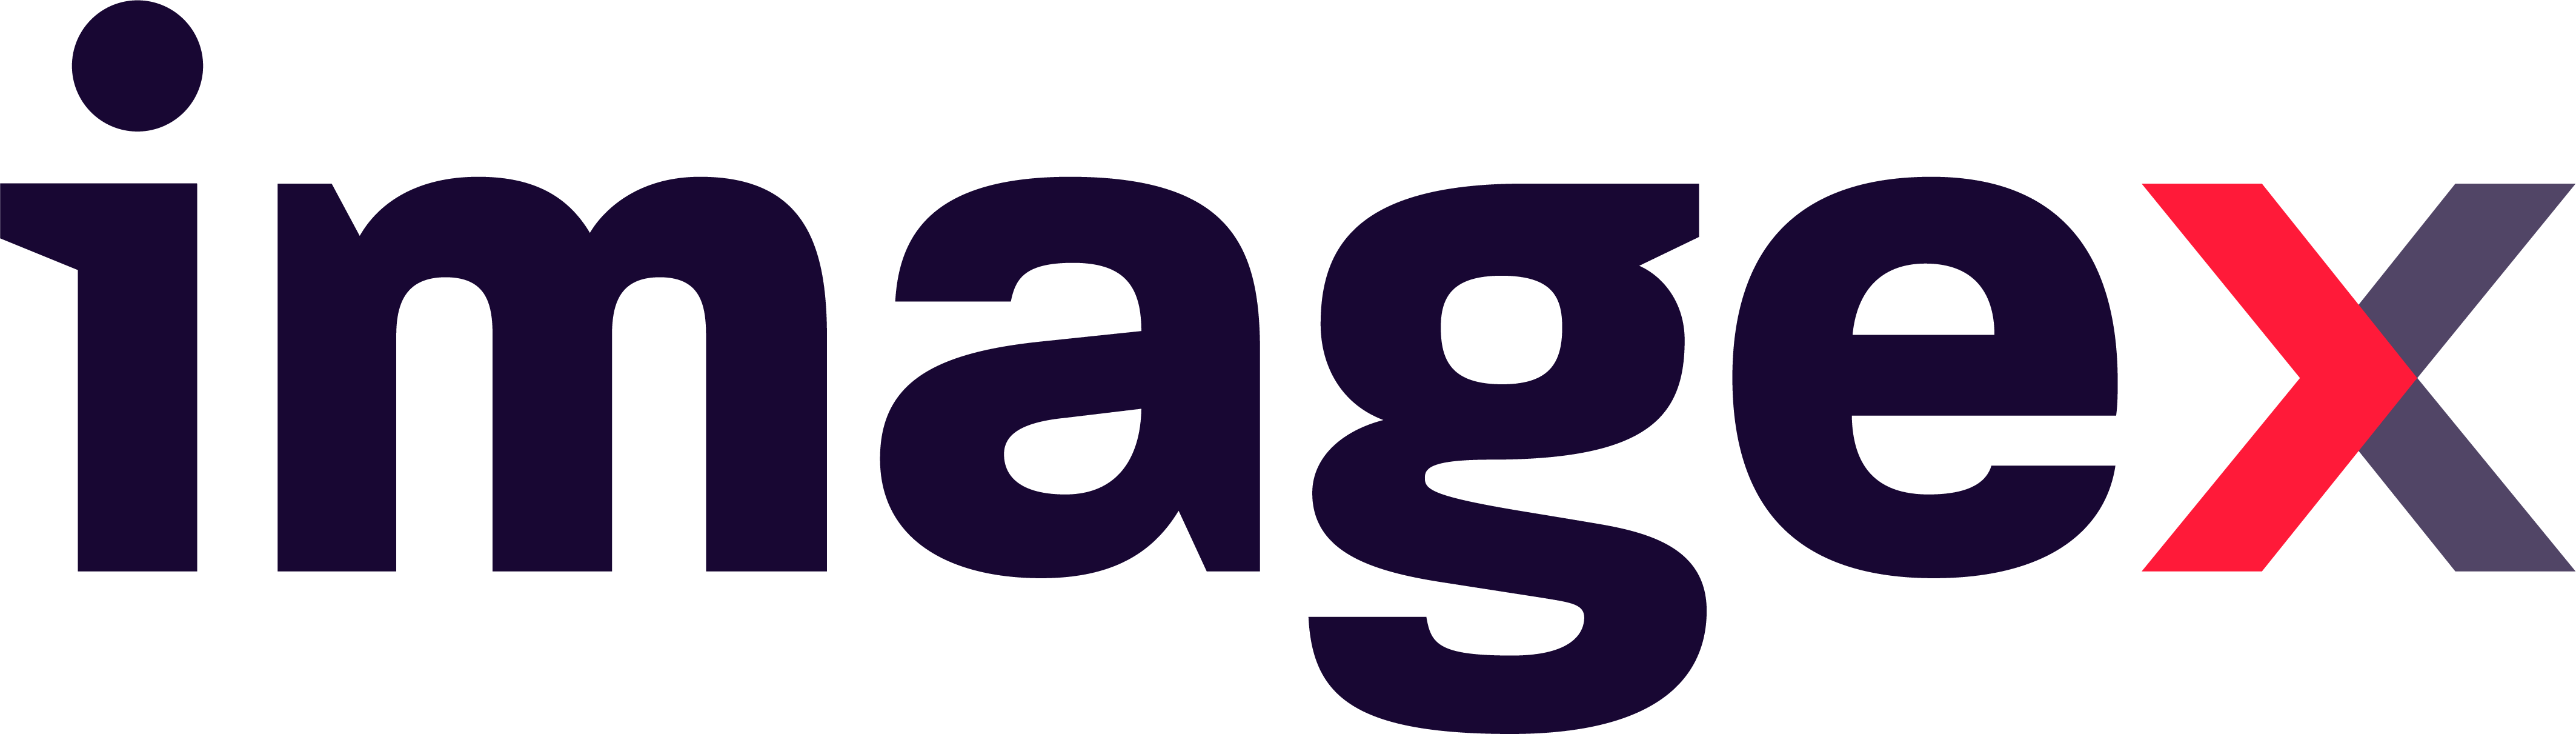 ImageX Logo